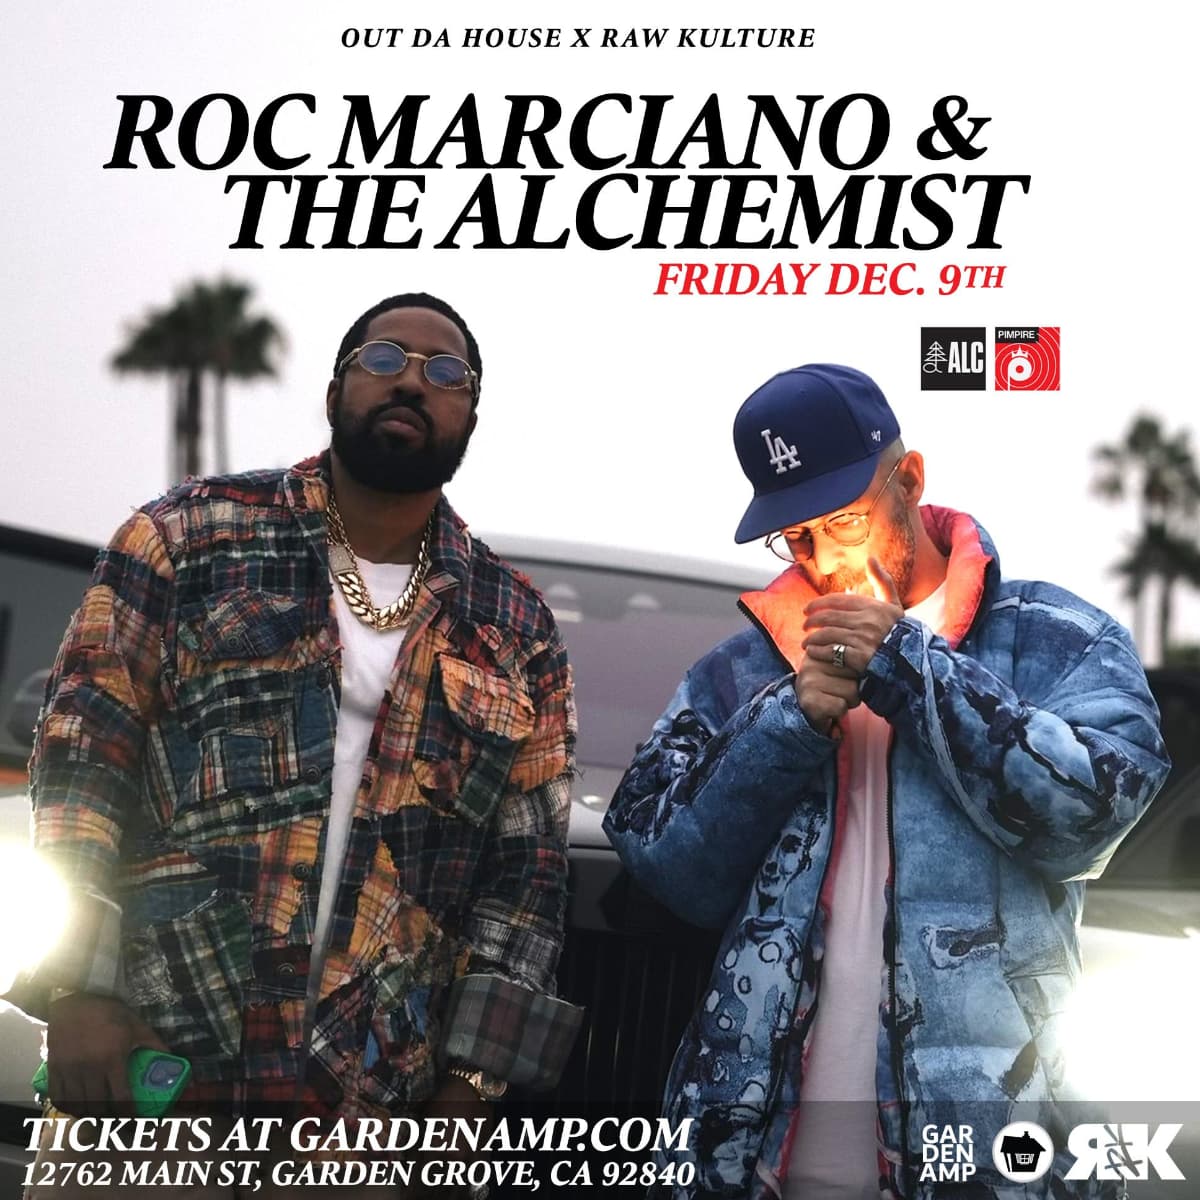 Roc Marciano & The Alchemist